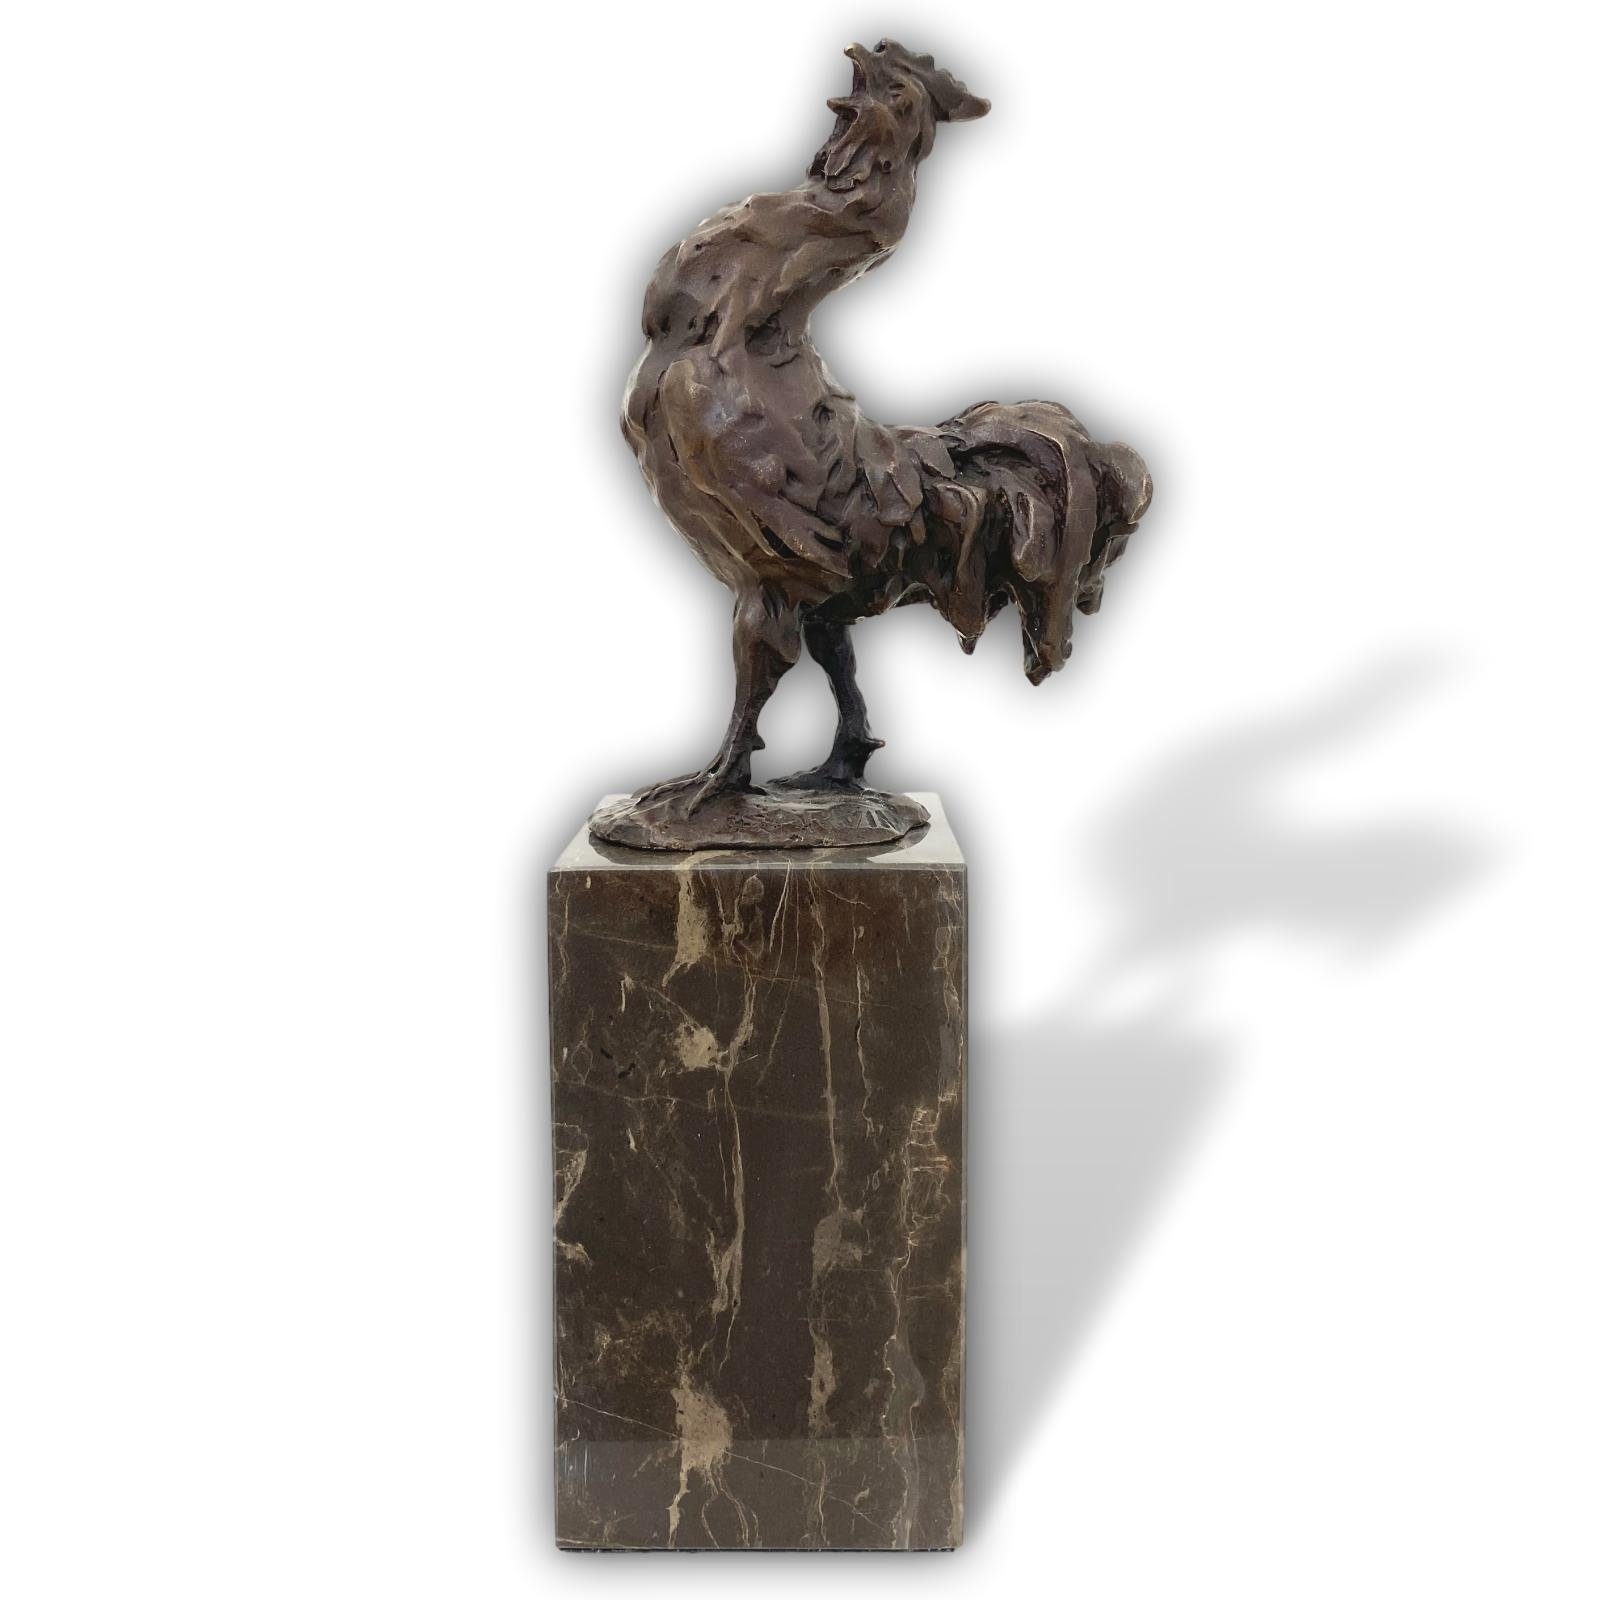 Aubaho Skulptur Bronzeskulptur Hahn nach Carvin Antik-Stil Skulptur Bronze Figur Repli